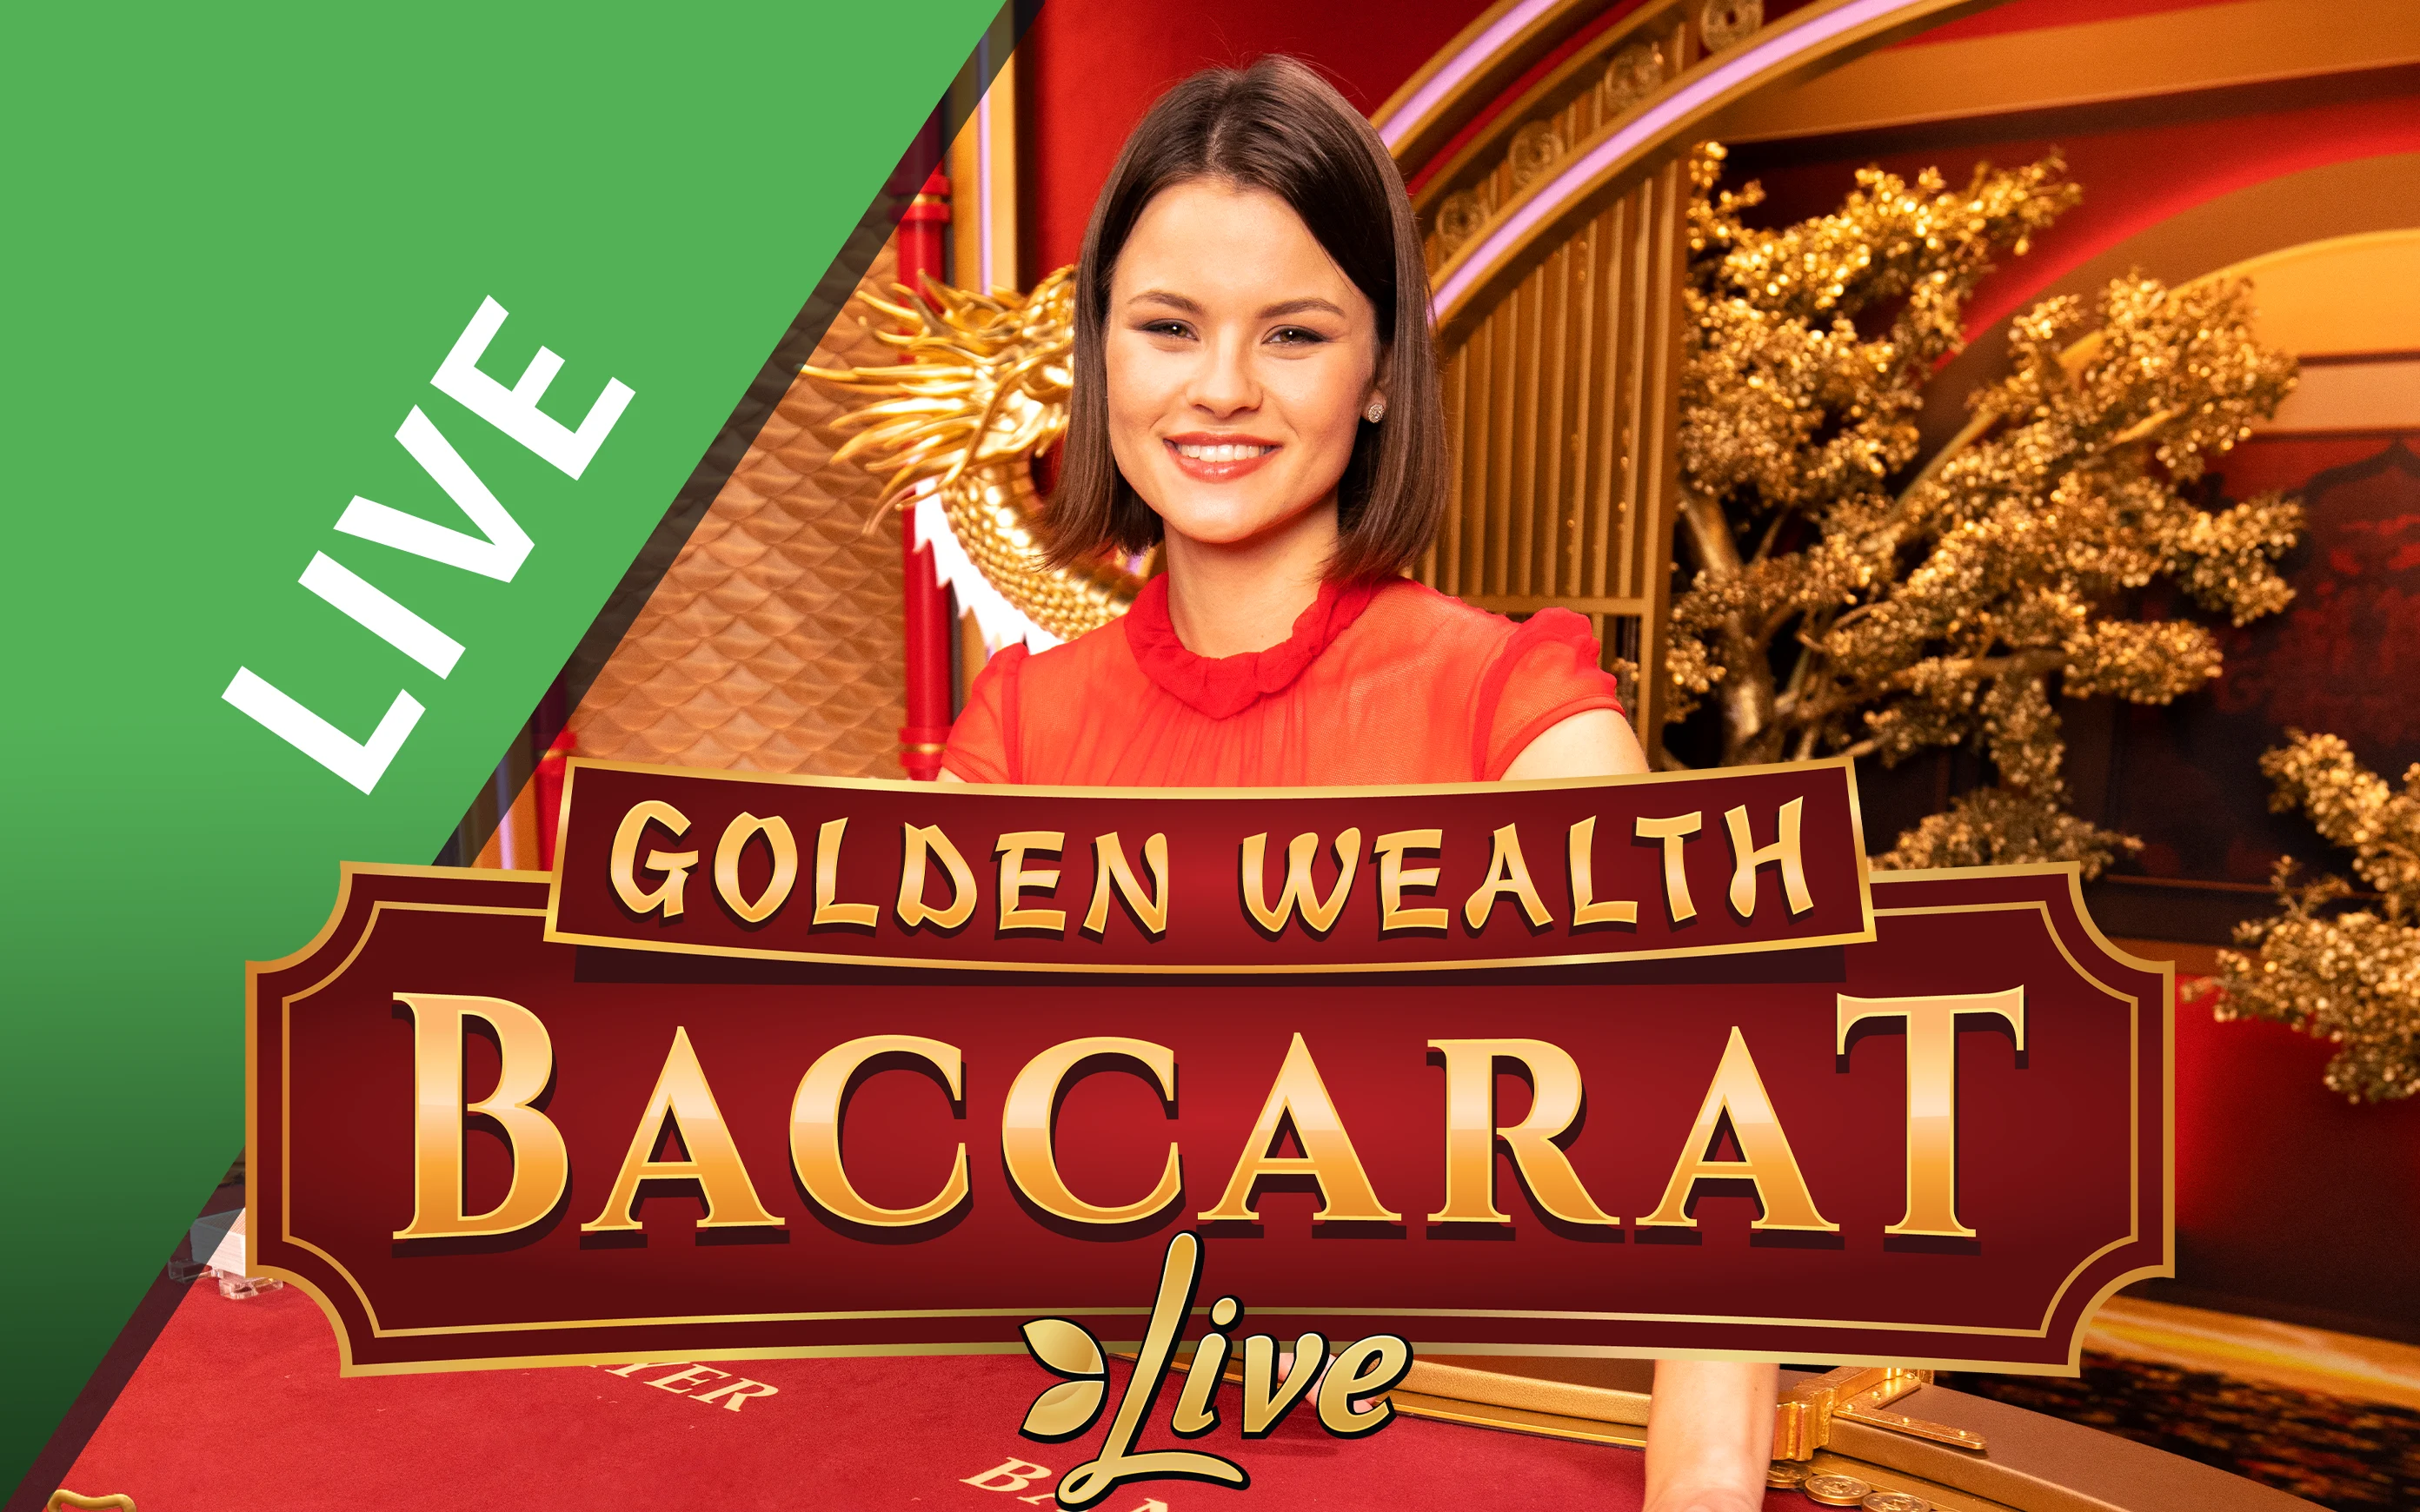 Play Golden Wealth Baccarat on Starcasino.be online casino